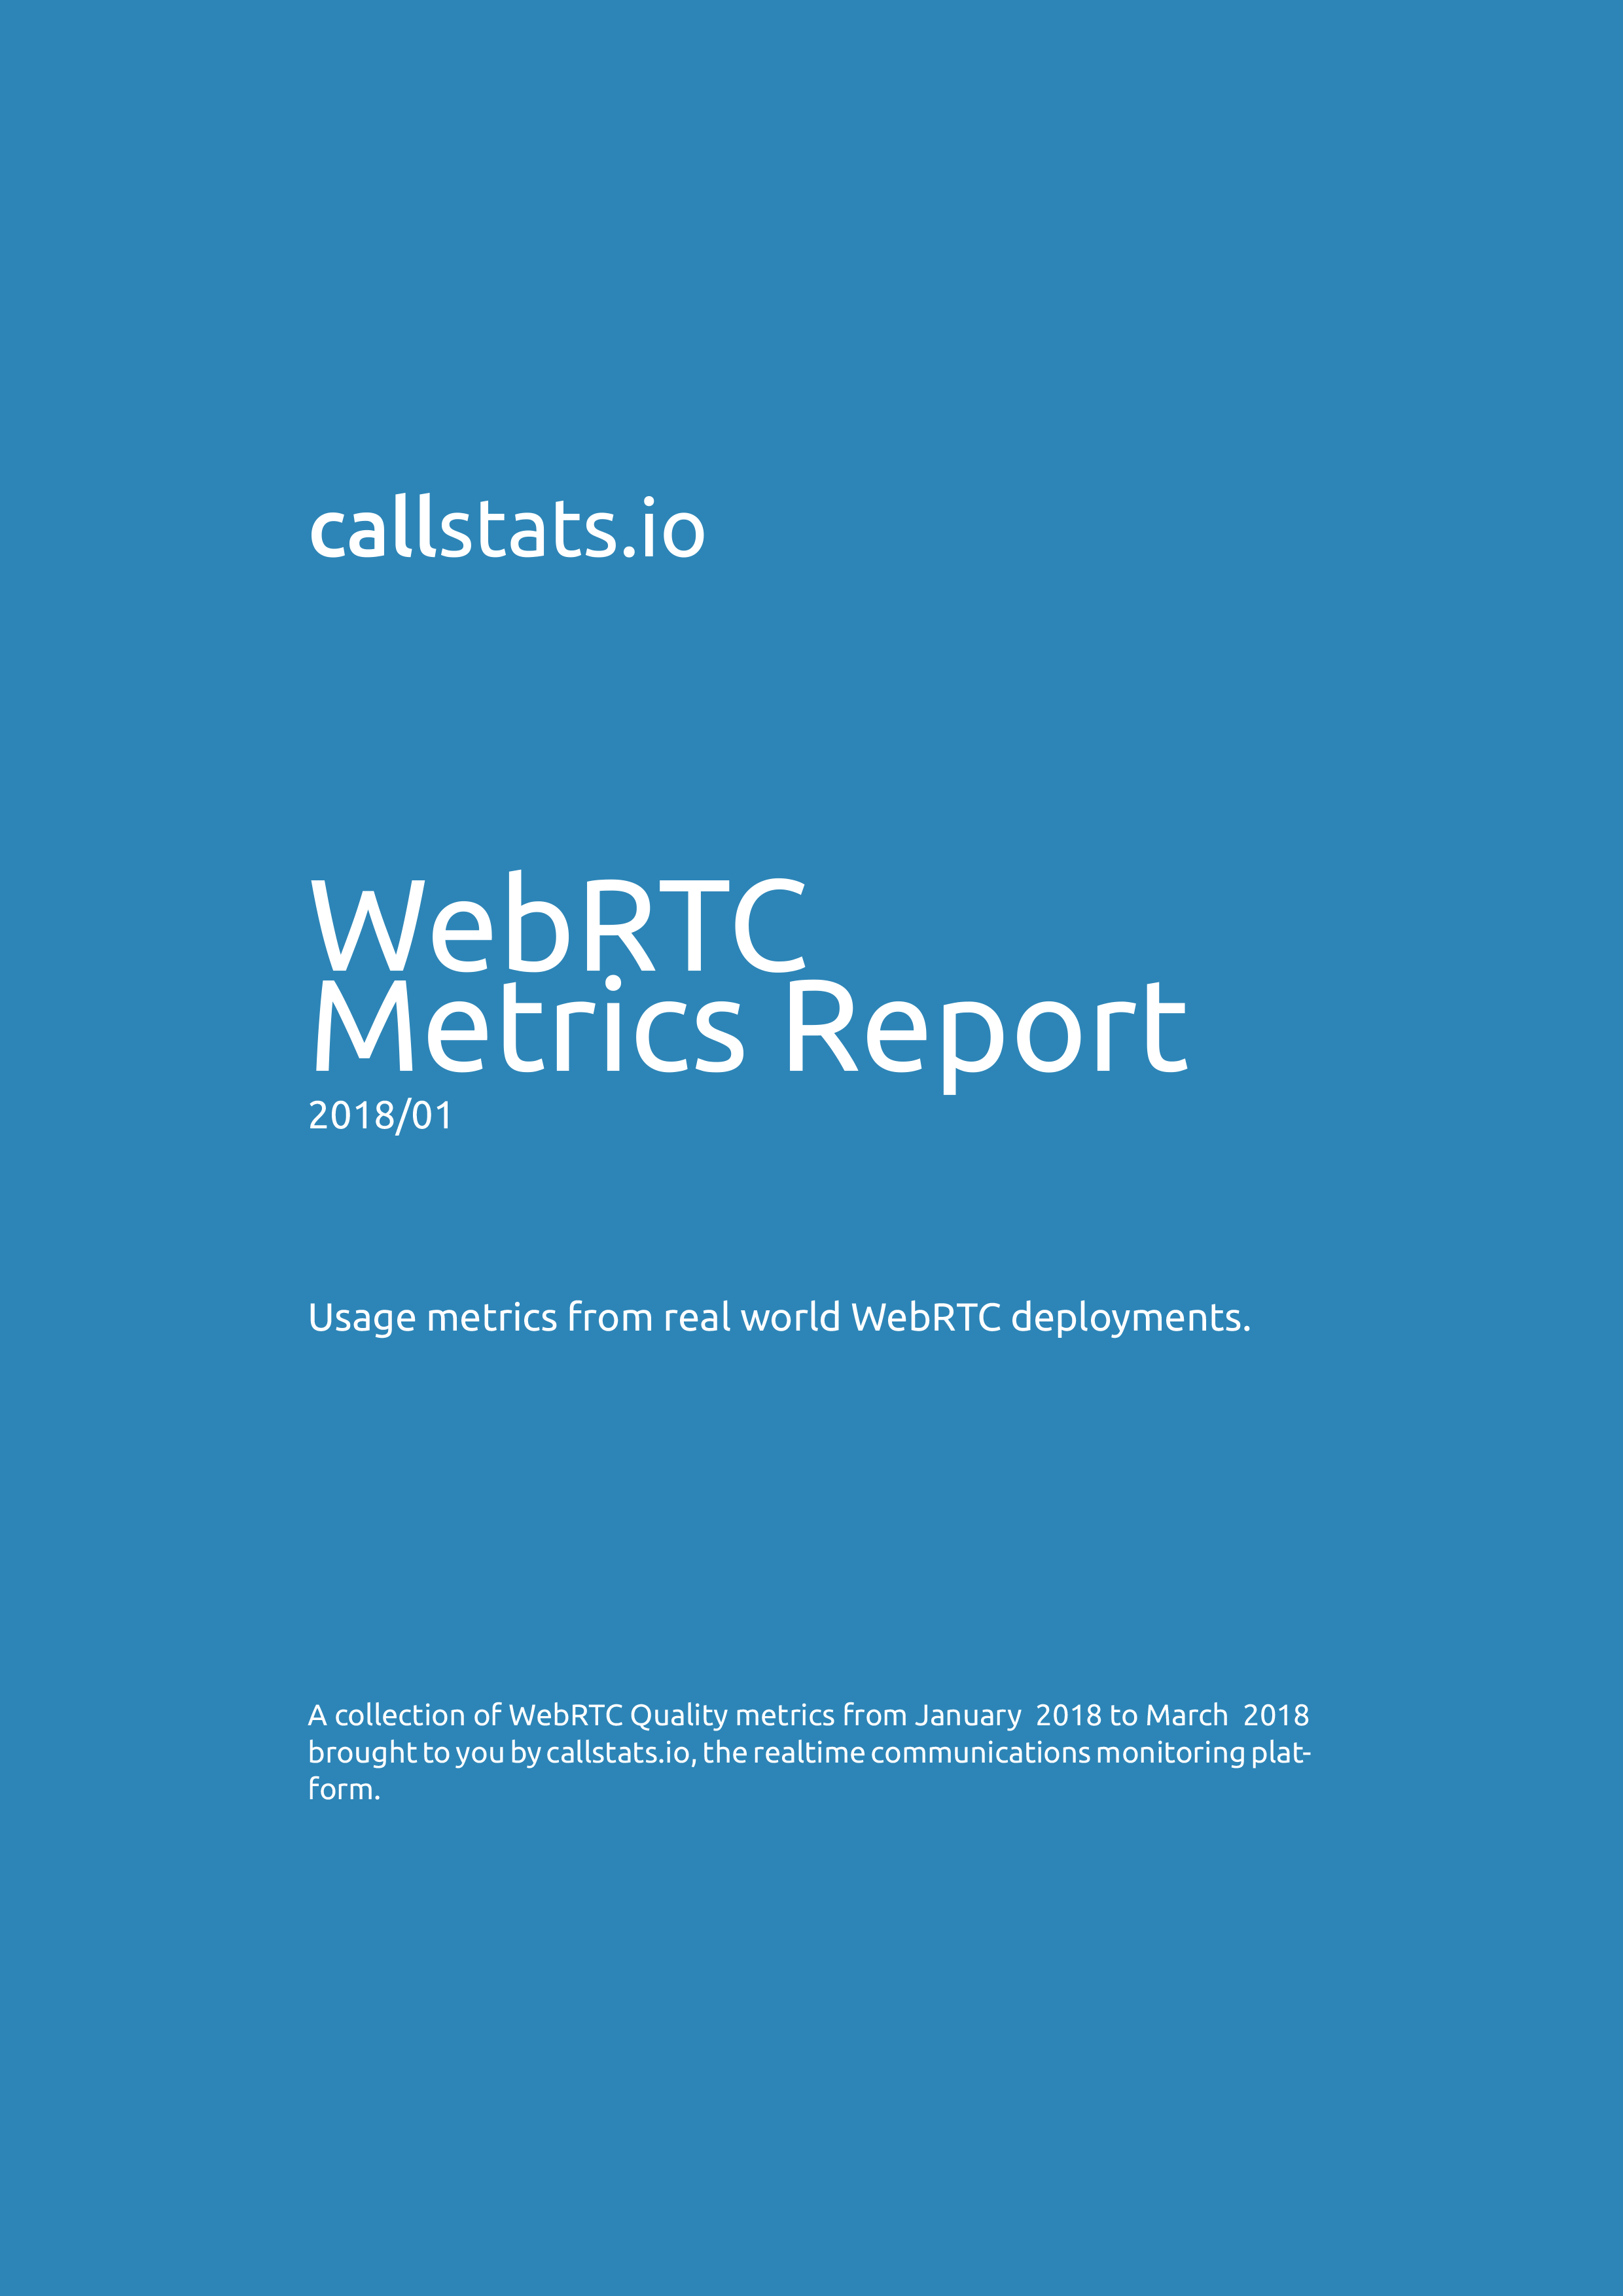 WebRTC Metrics Report 2018/01 by callstats.io